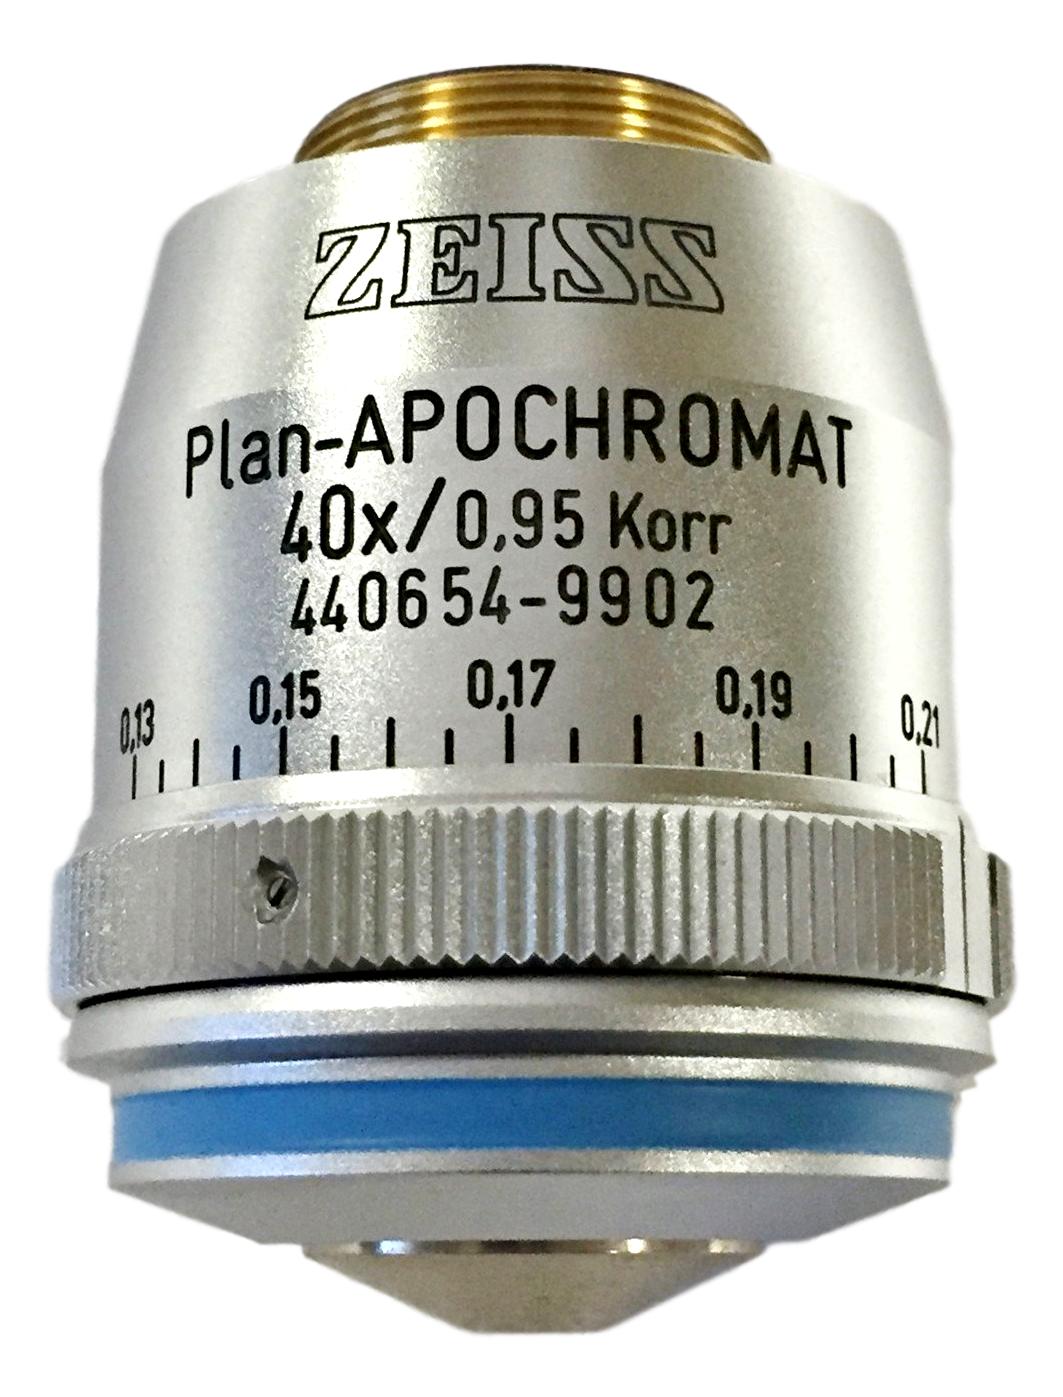 Zeiss Plan-ApoChromat 40x/0.95 Korr Infinity Corrected / 0.13-0.21